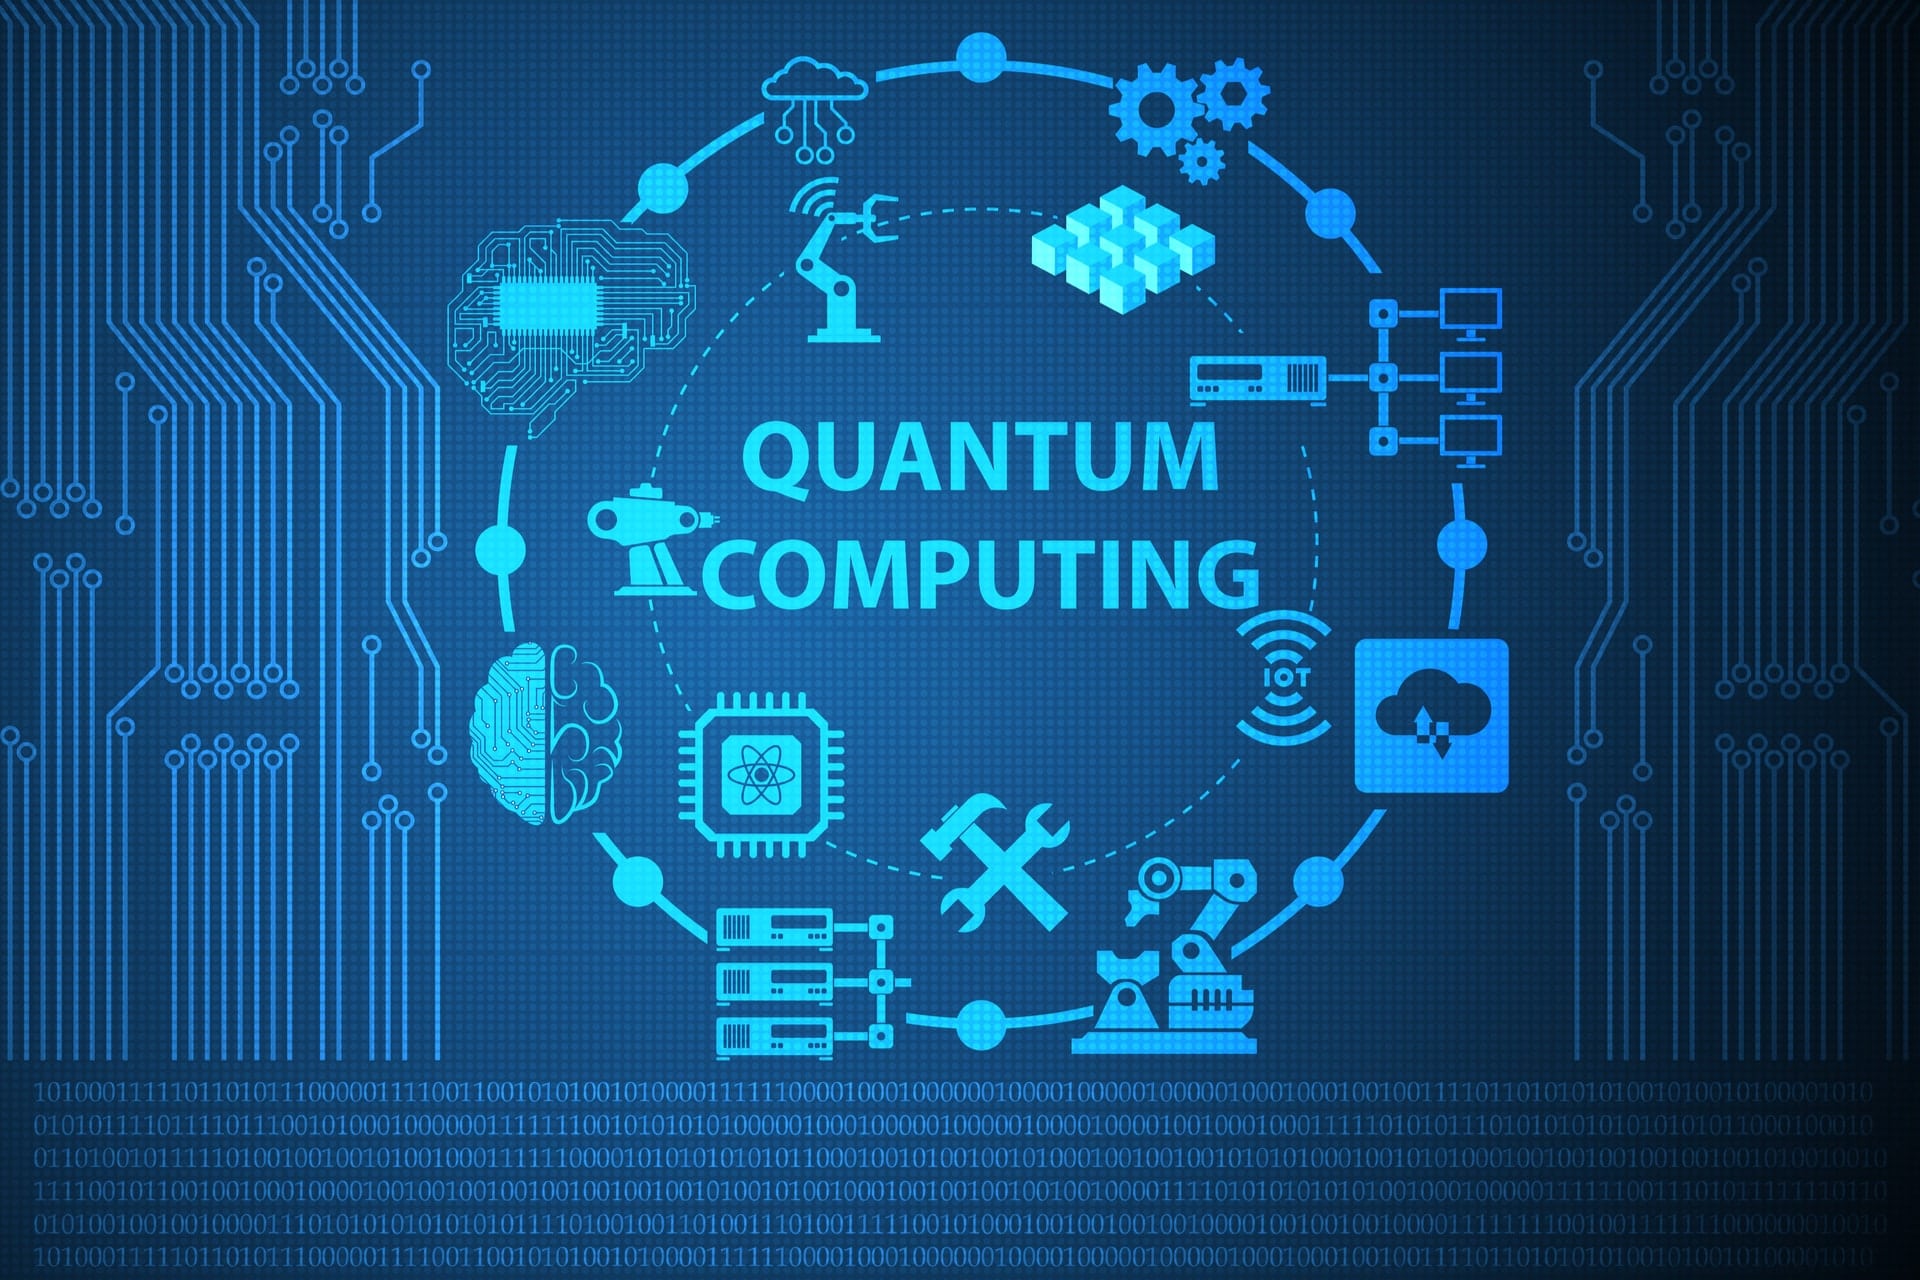 Impacts of quantum computing in business